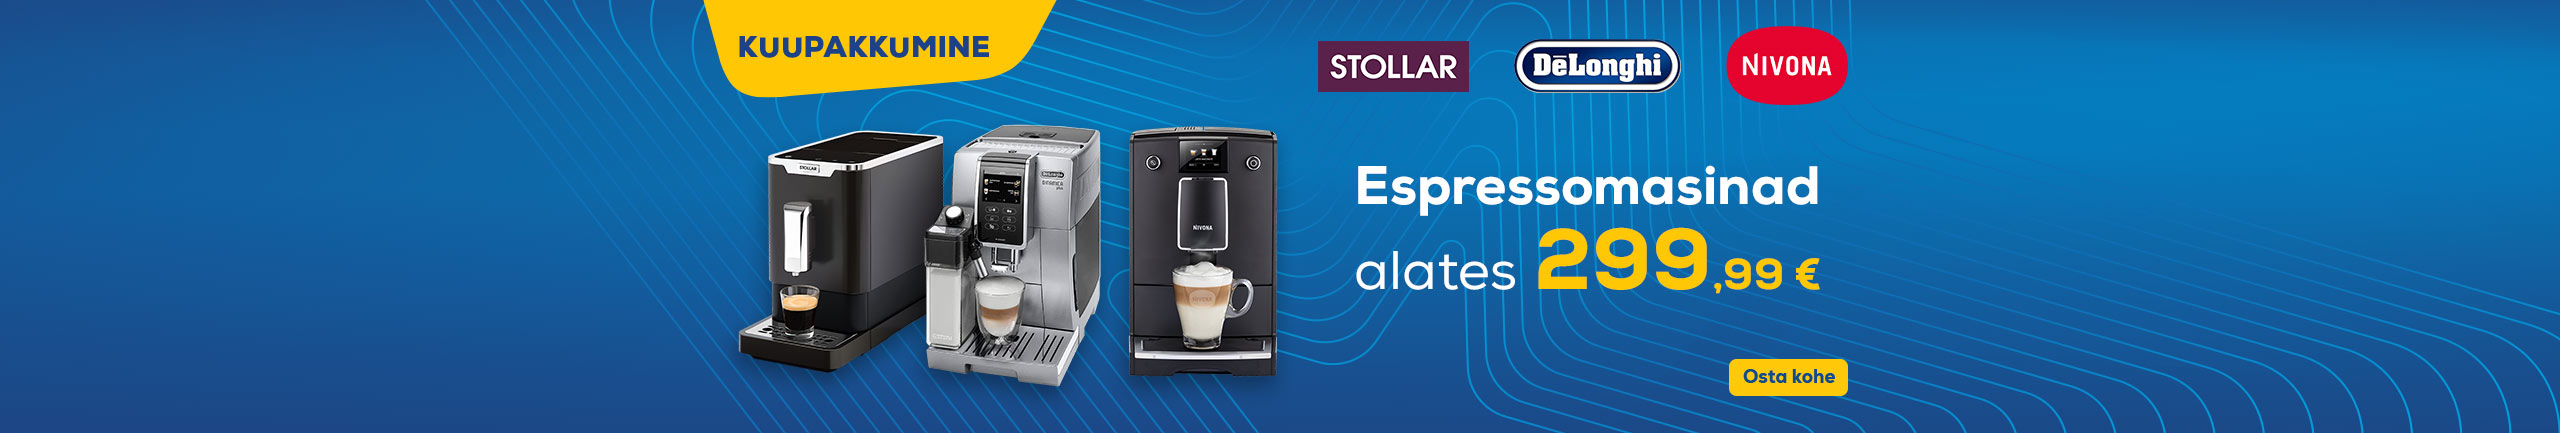 Espresso machines starting from 299,99 €